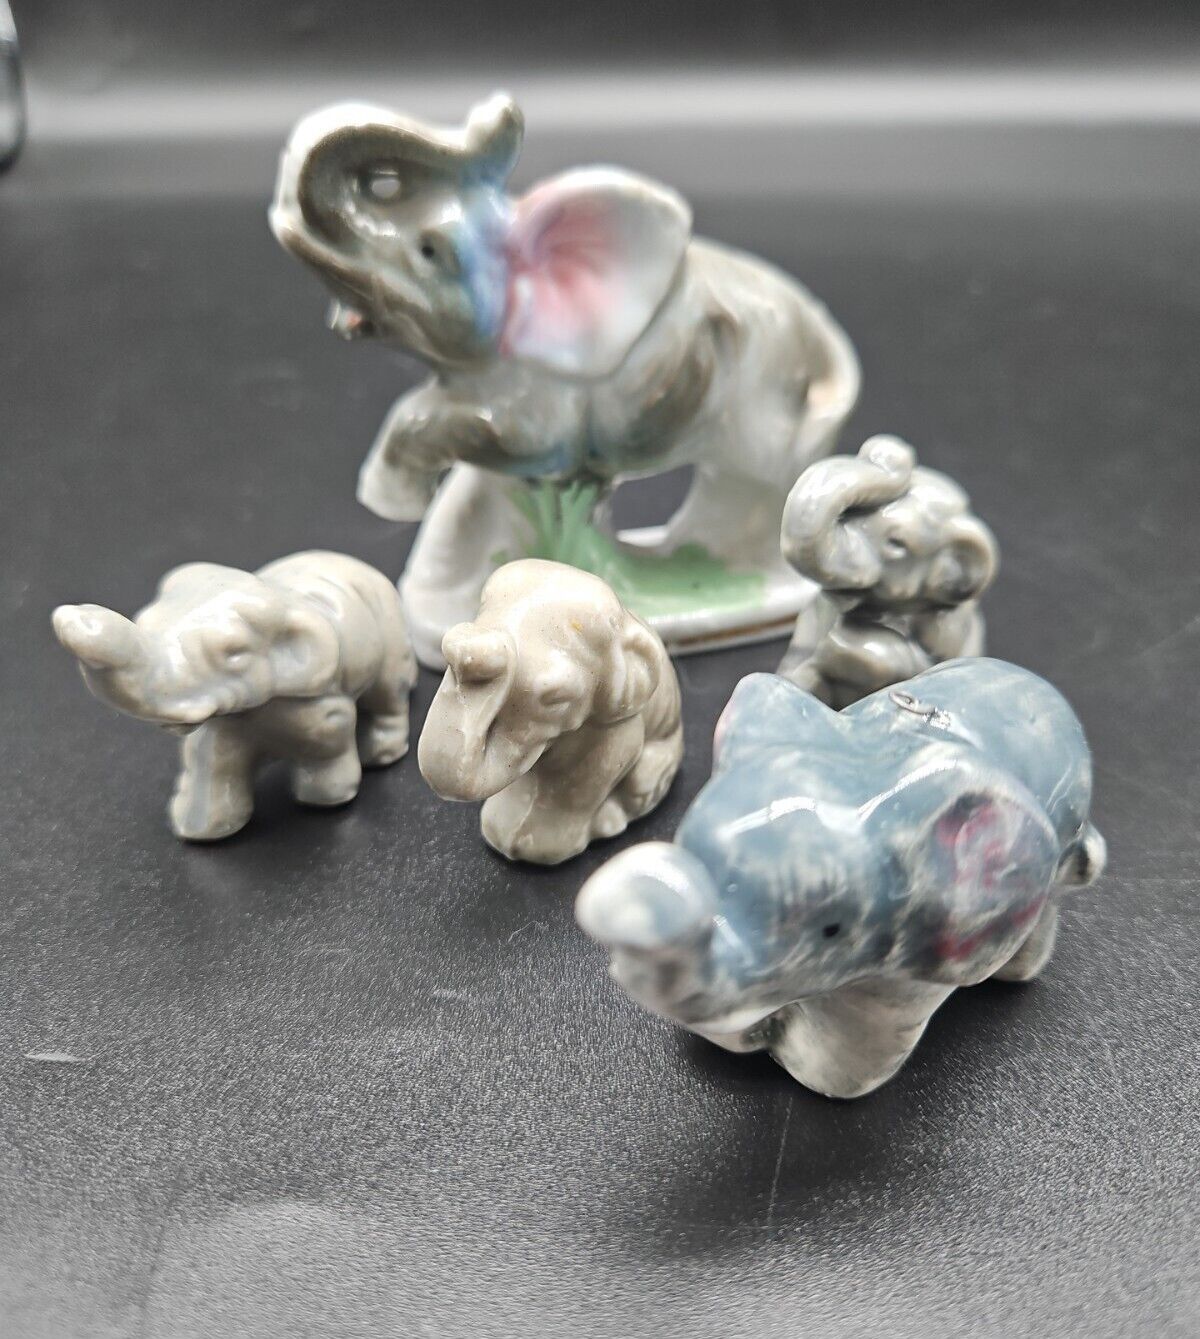 Vintage Porcelain Ceramic Small Elephant Figurines Trunk Up Japan Mixed Lot (5)